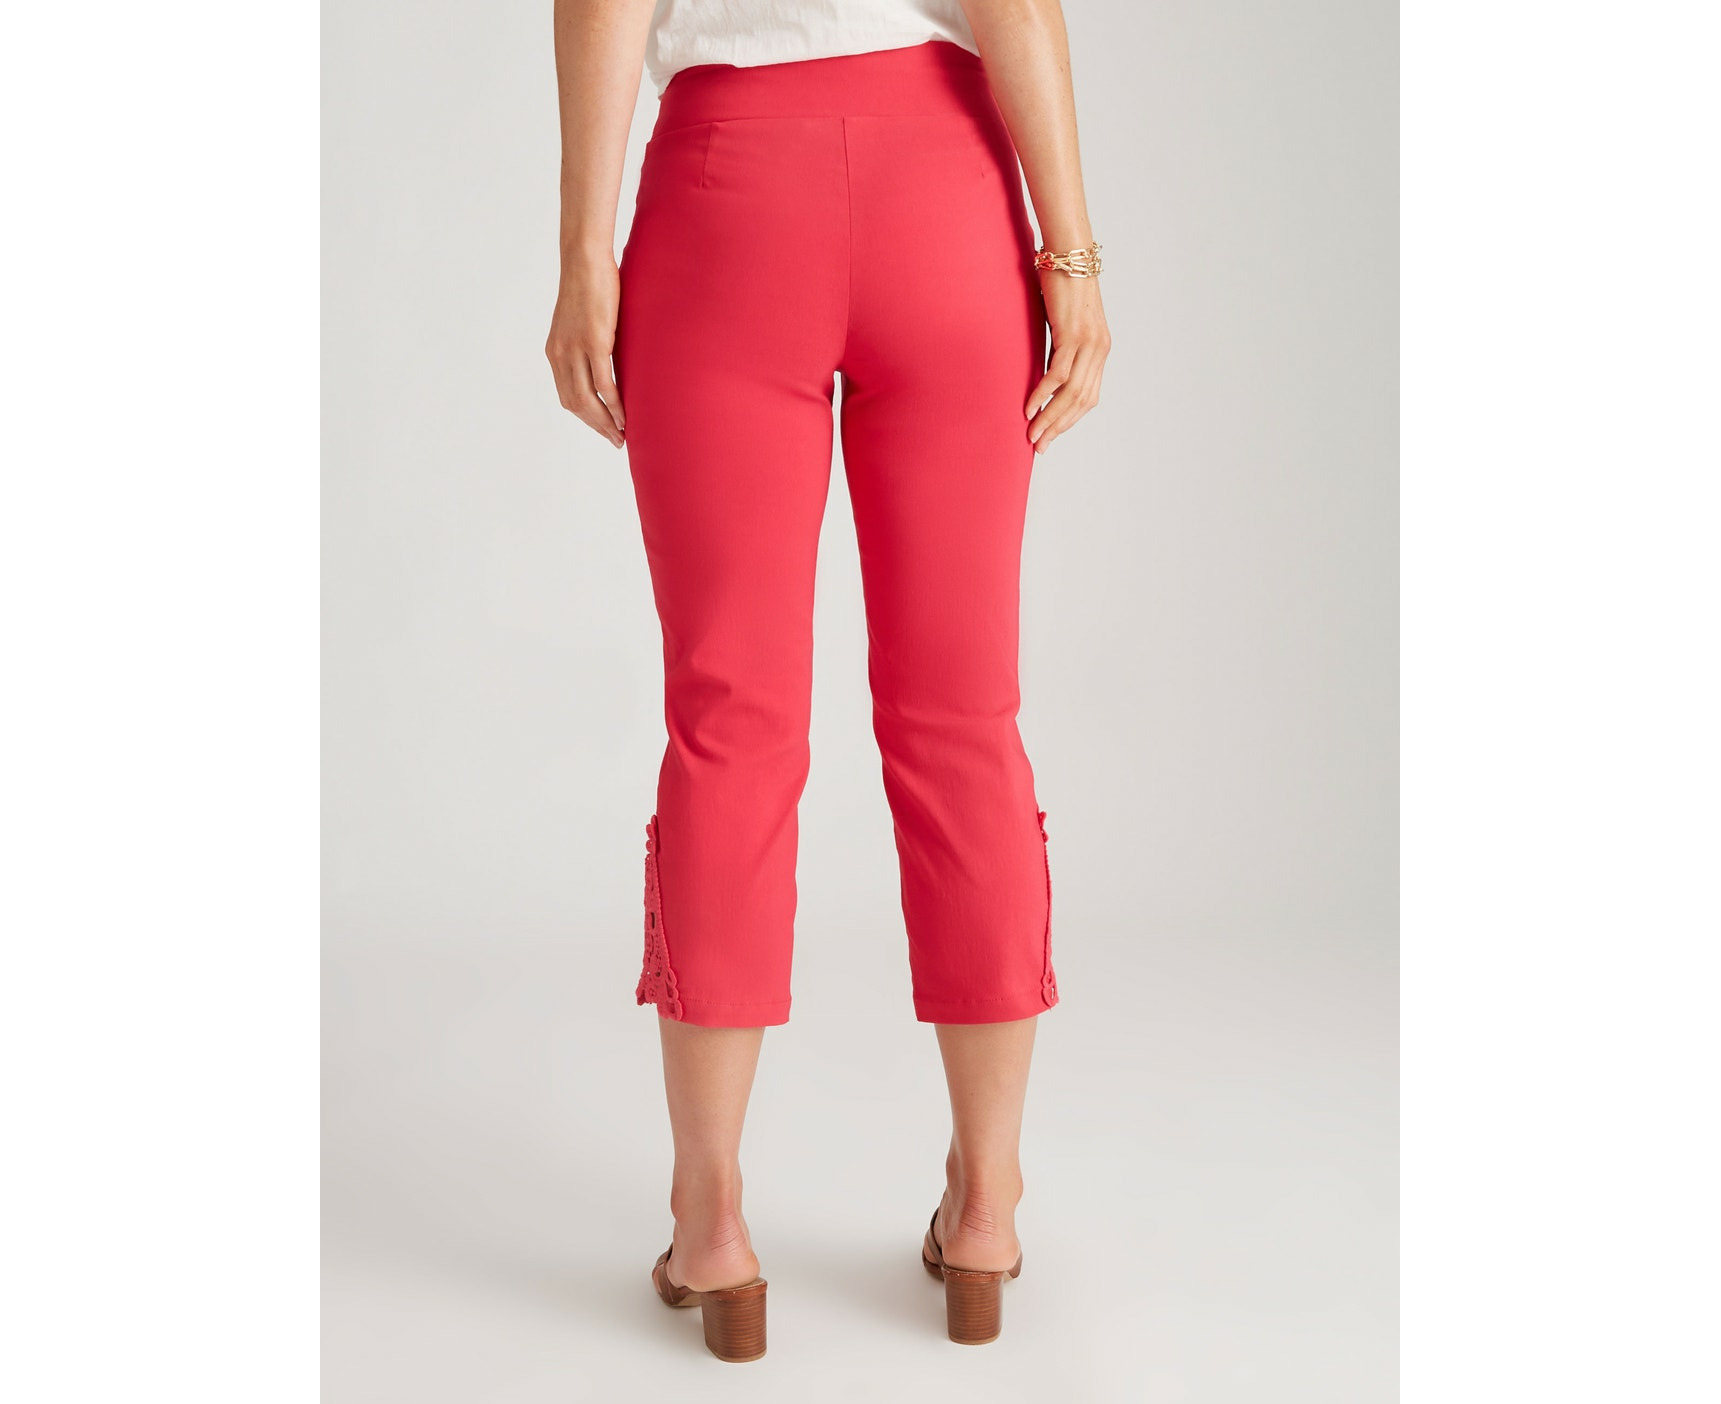 JM Collection Red Capri Pants for Women